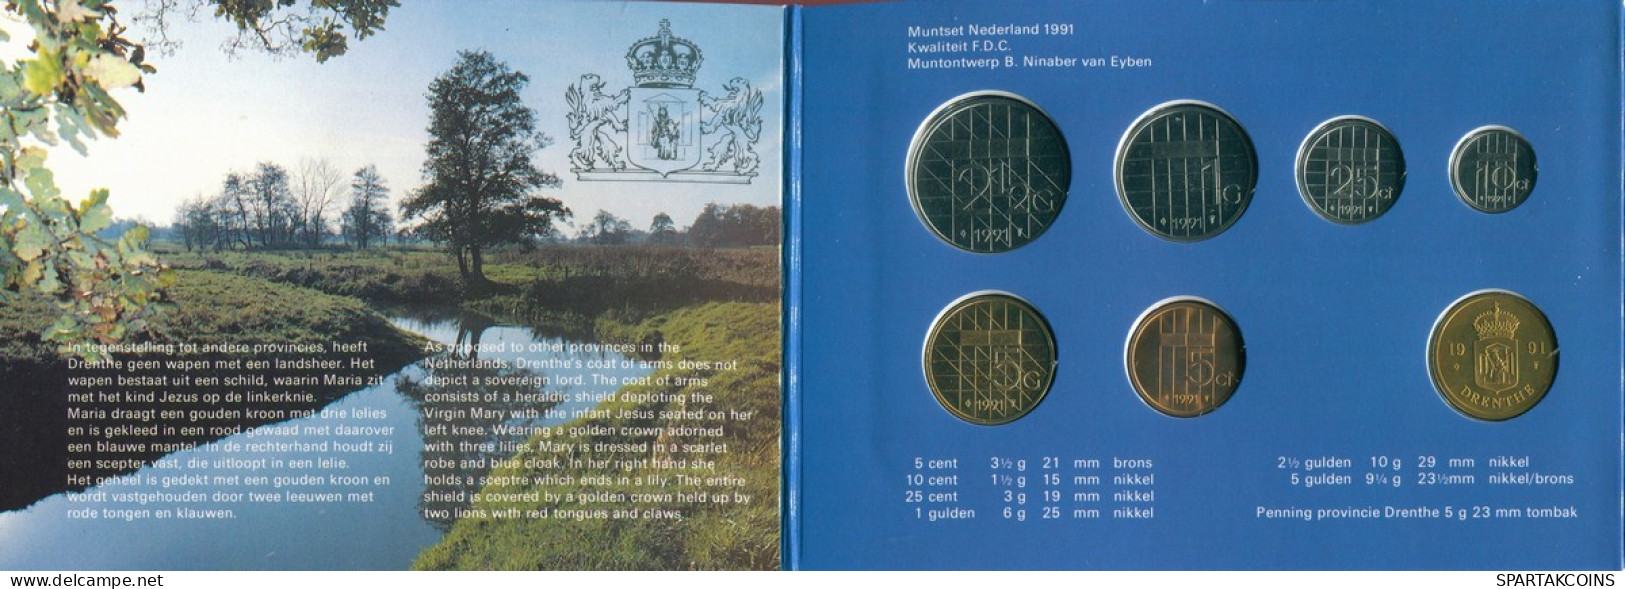 NEERLANDÉS NETHERLANDS 1991 MINT SET 6 Moneda + MEDAL #SET1111.7.E - Mint Sets & Proof Sets